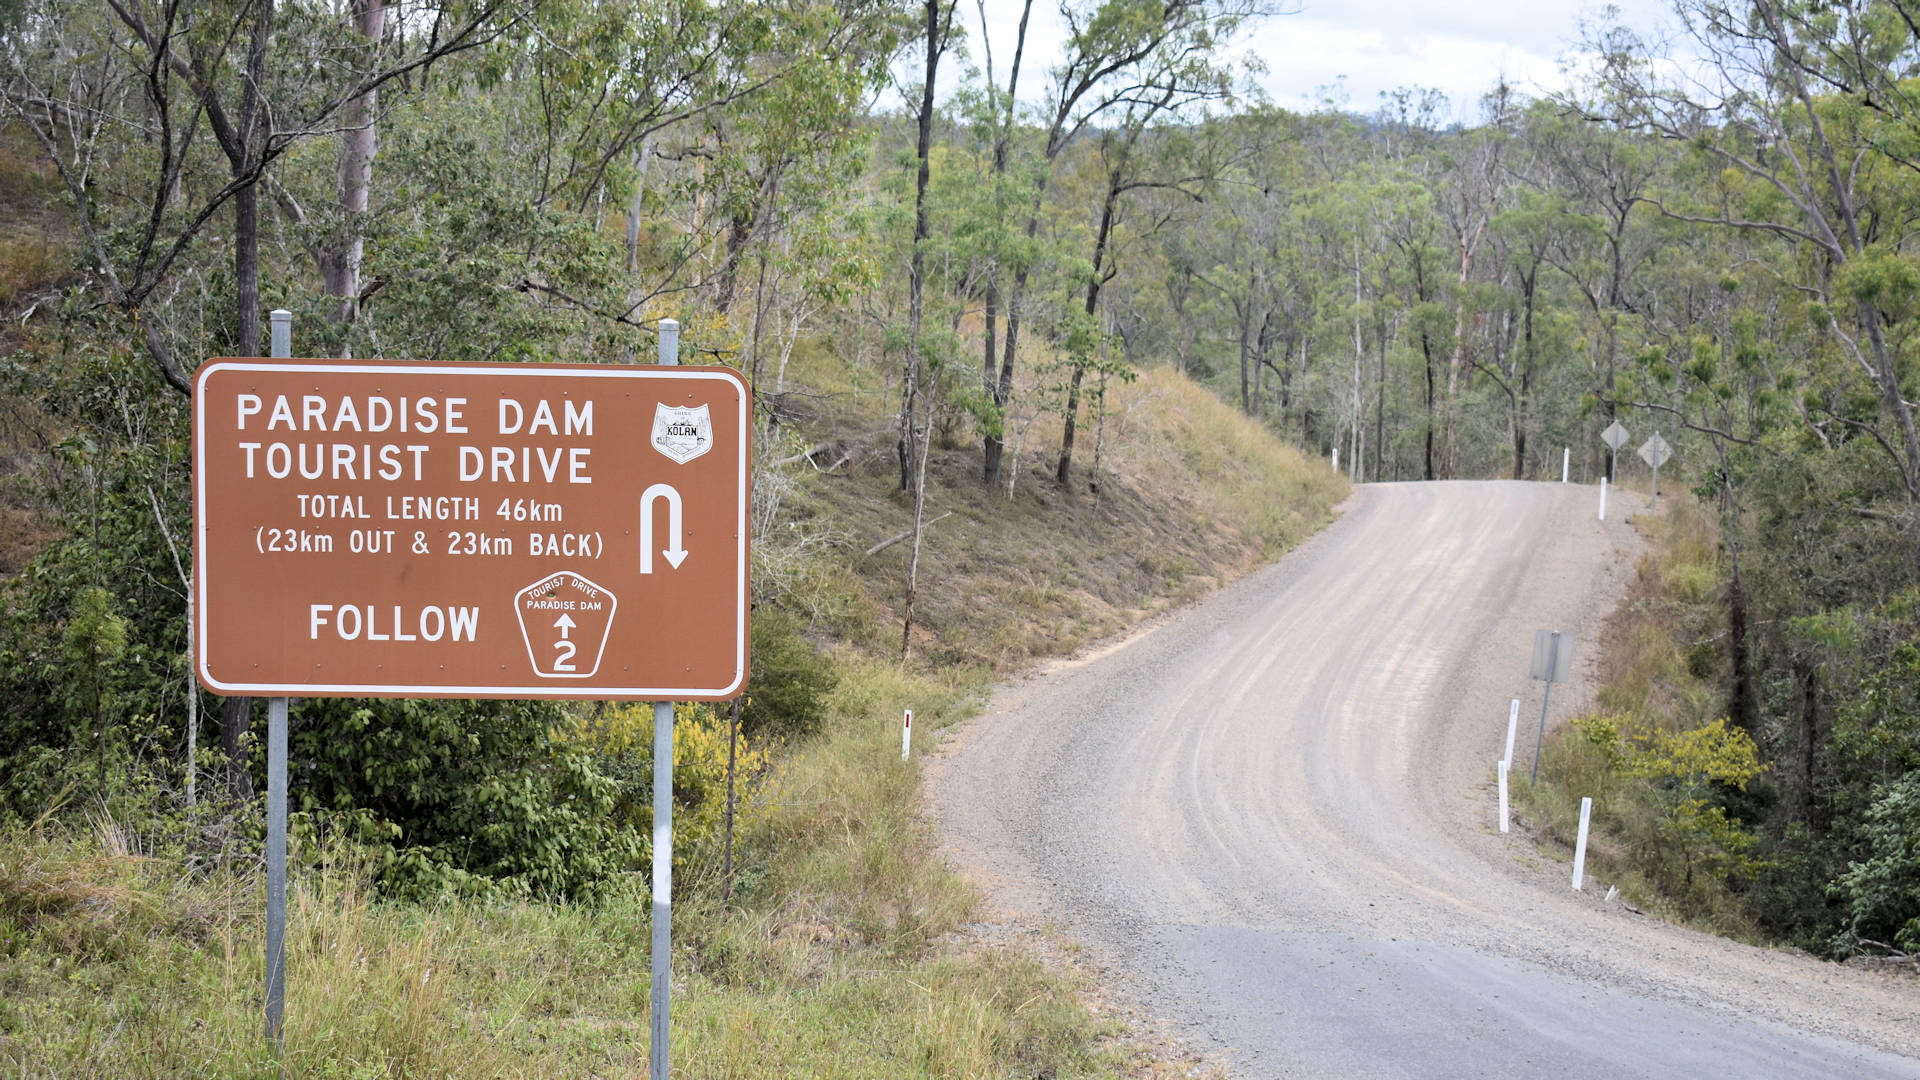 Start of Paradise Dam Tourist Drive, total length 46km